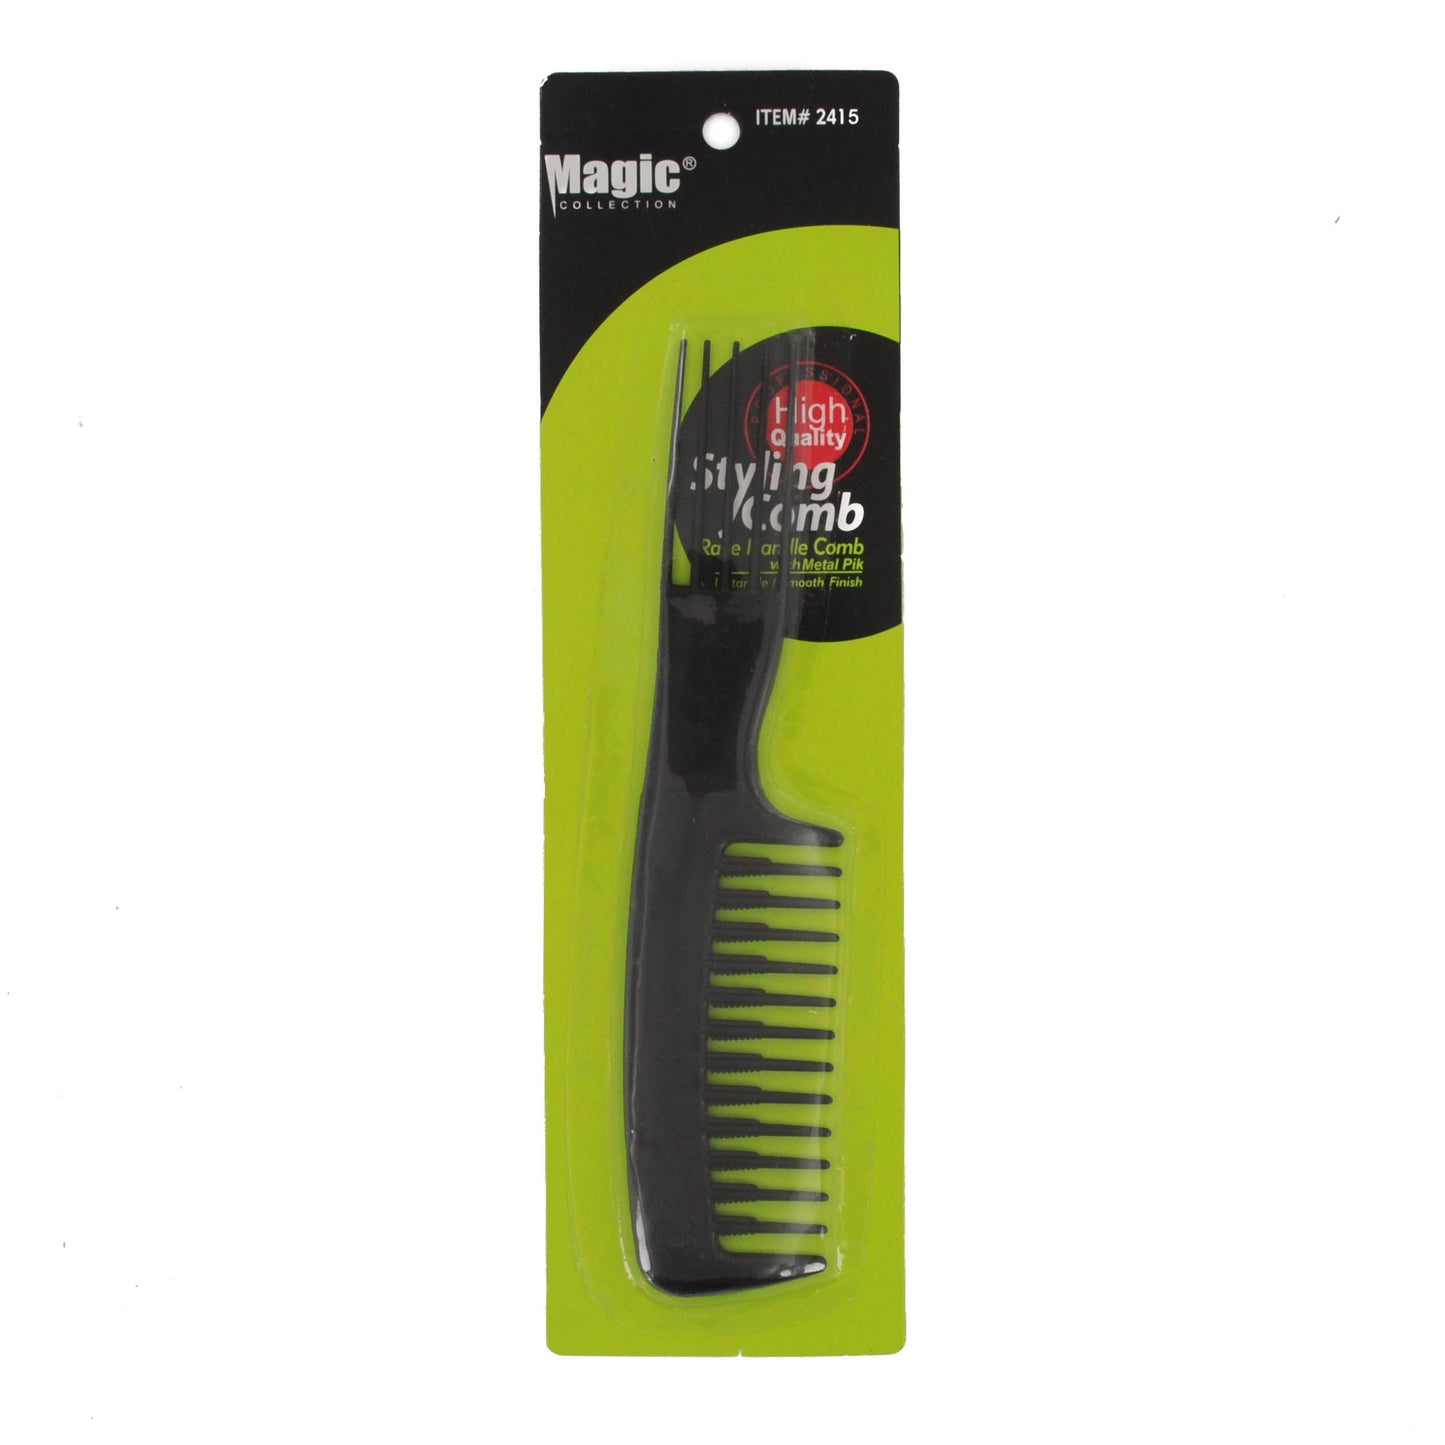 Magic Collection Rake Handle Comb with Plastic Pik #2415